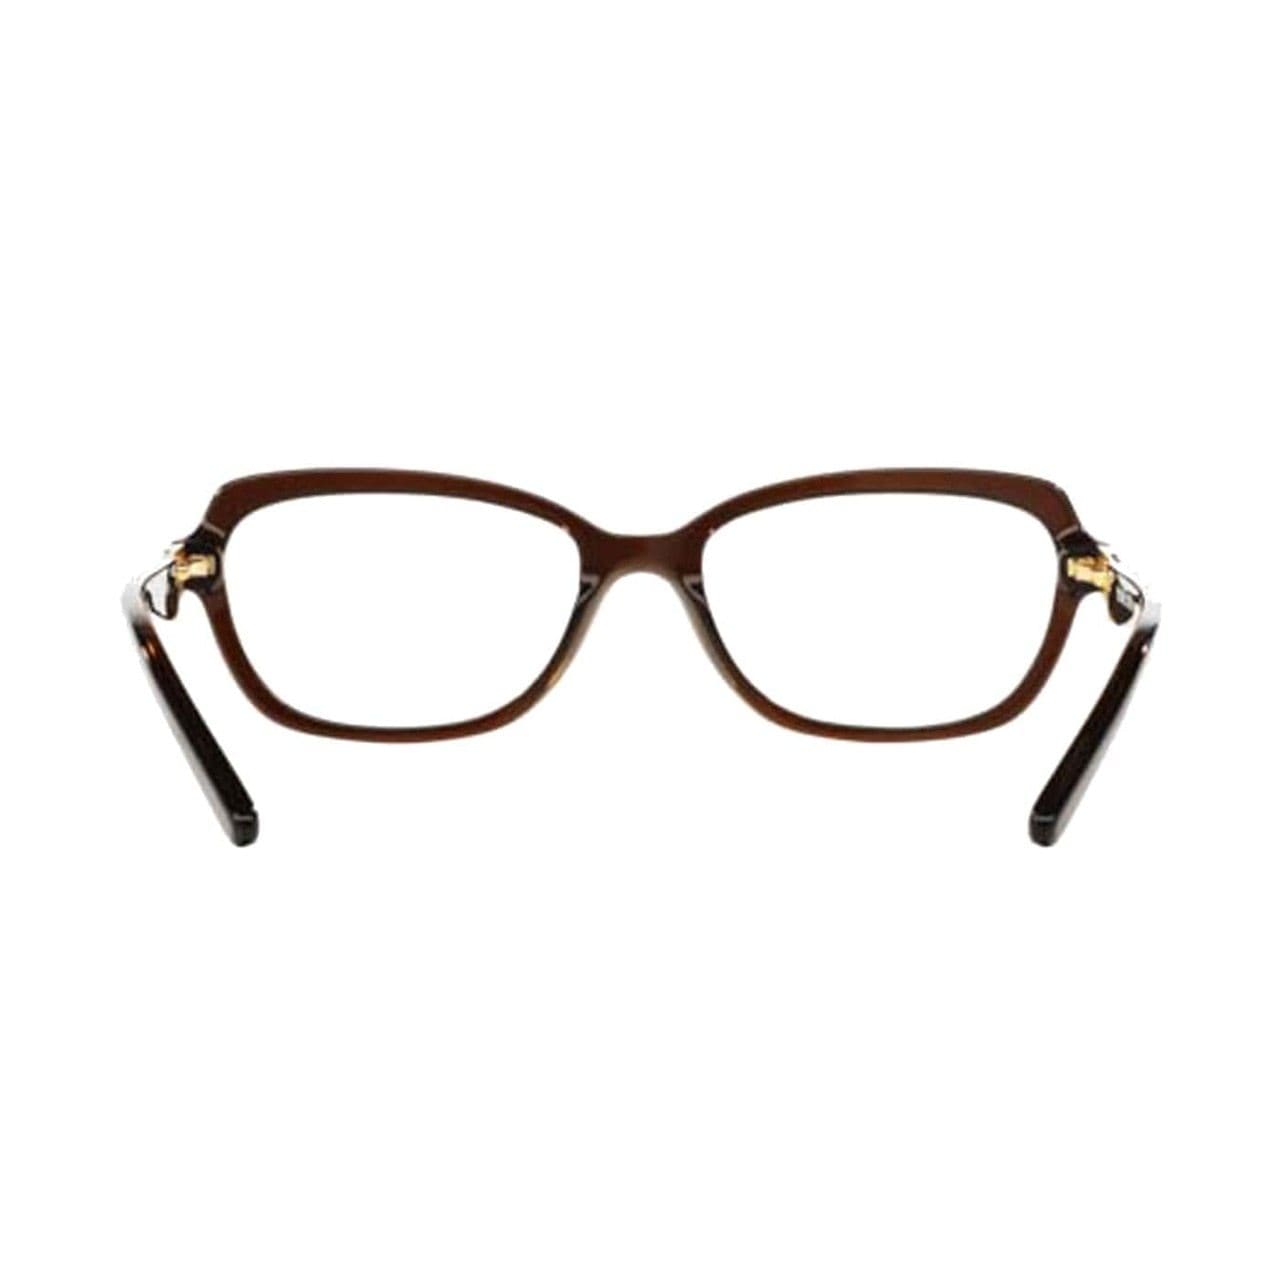 Michael Kors MK 4025-3085 Sadie IV Dark Brown Transparent Rectangular Women's Eyeglasses 725125950213